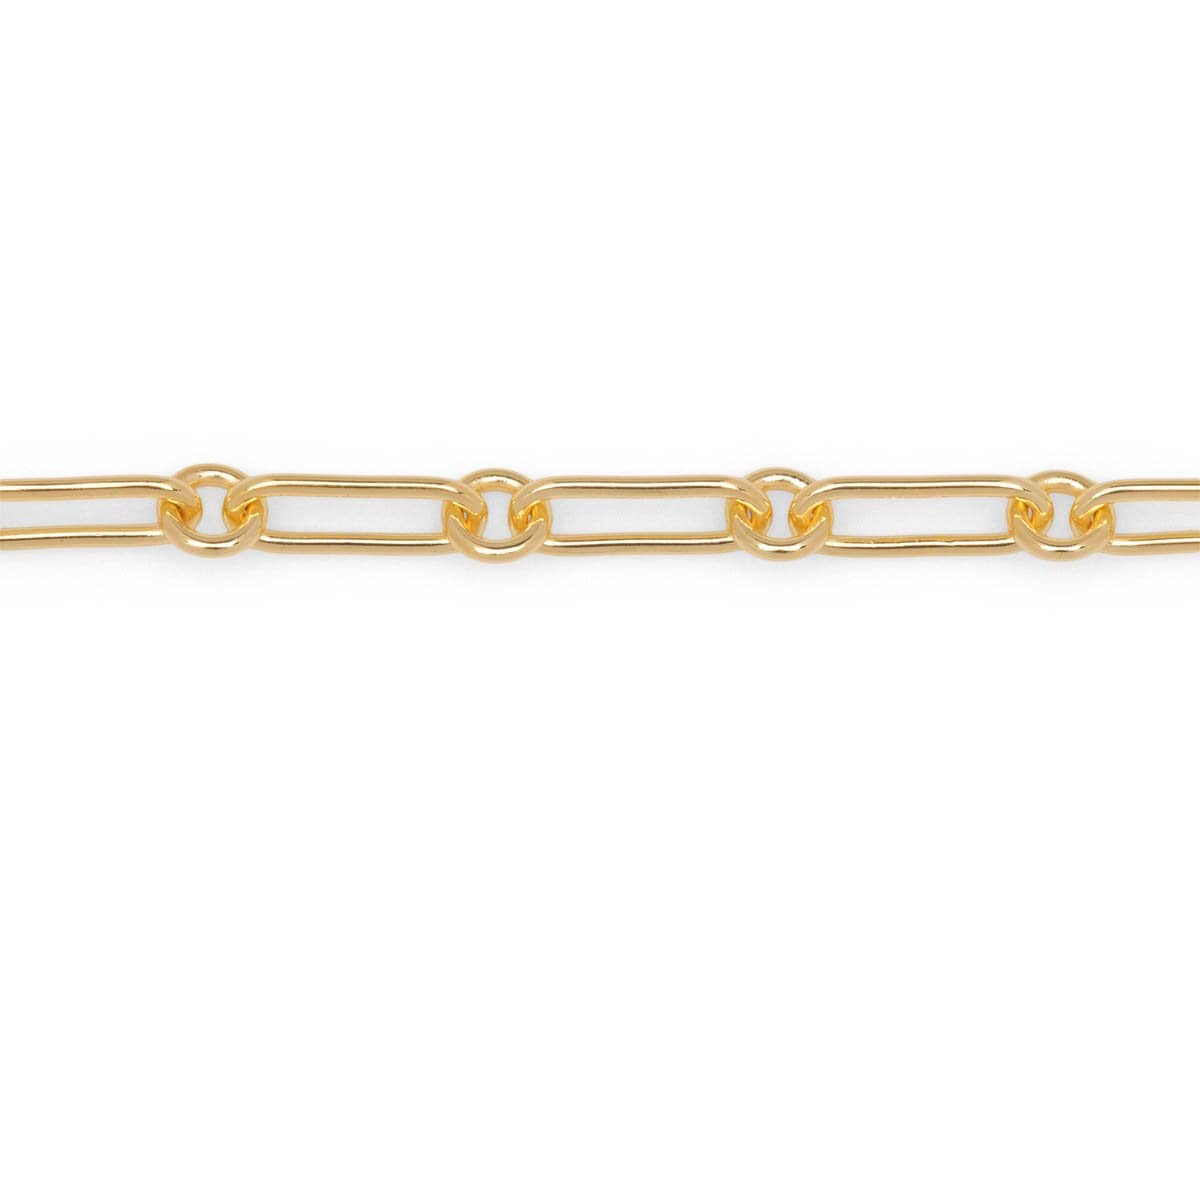 Tom Wood Jewelry 925 STERLING SILVER/9K GOLD / 7.7 IN. BOX BRACELET LARGE (7.7 INCH)